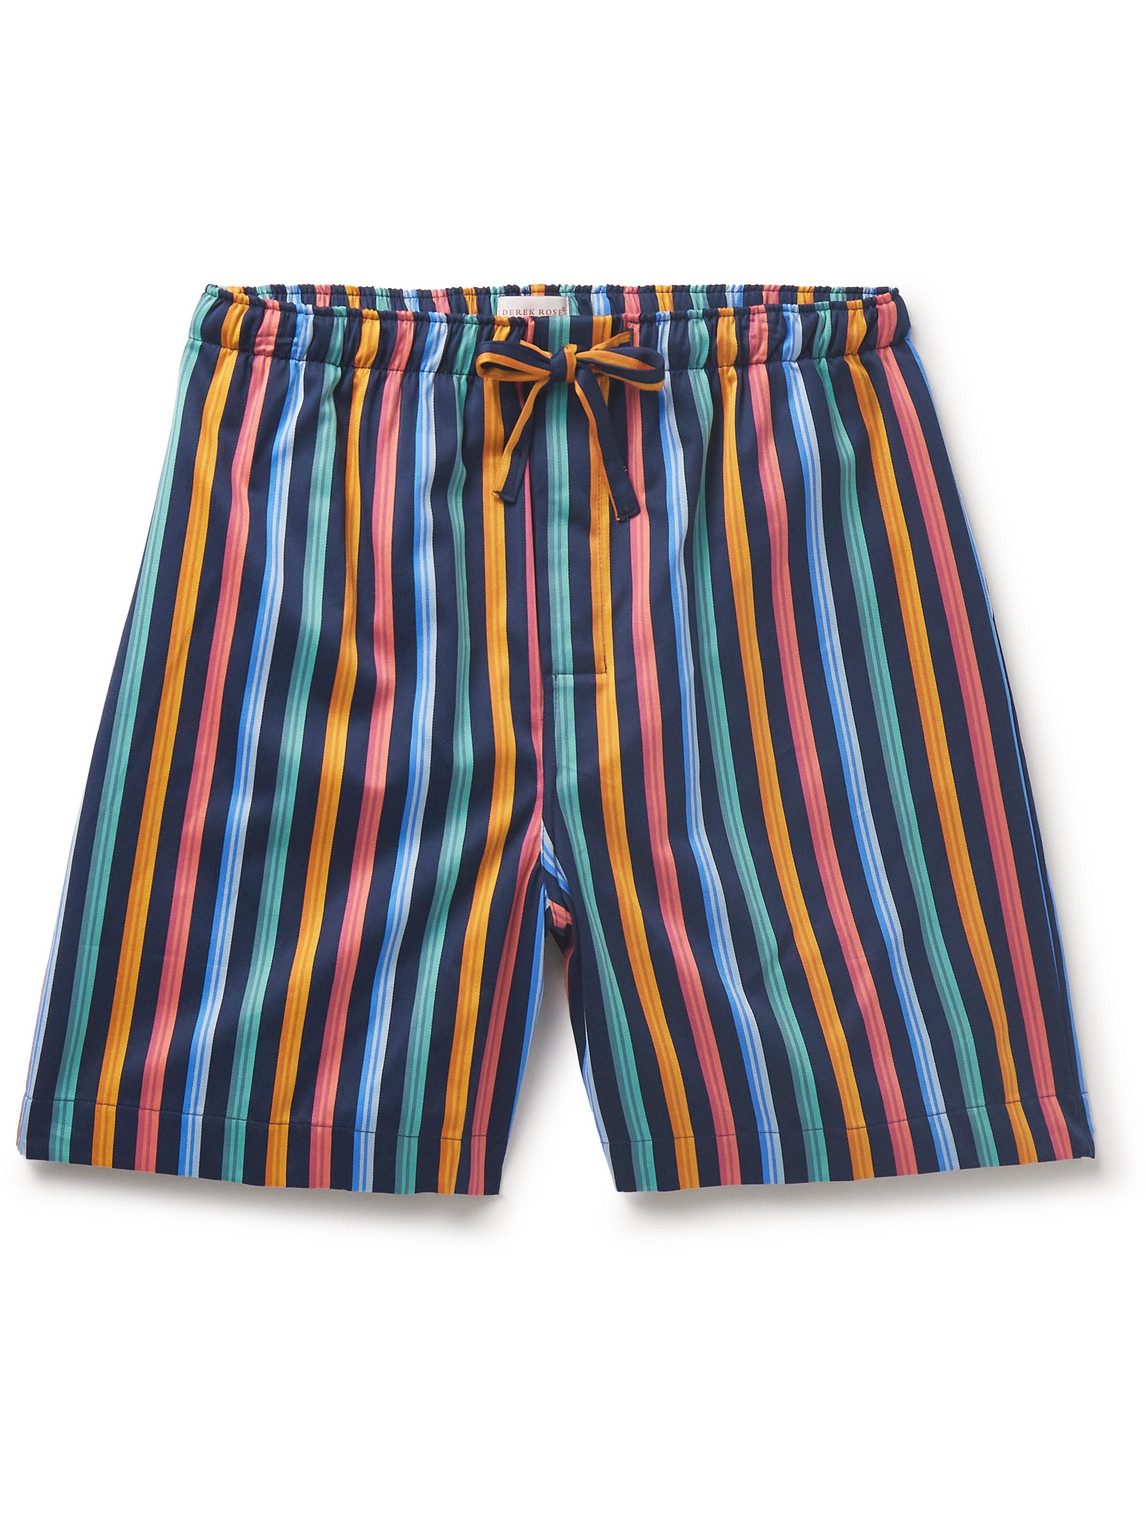 Wellington 56 Striped Cotton-Satin Drawstring Pyjama Shorts